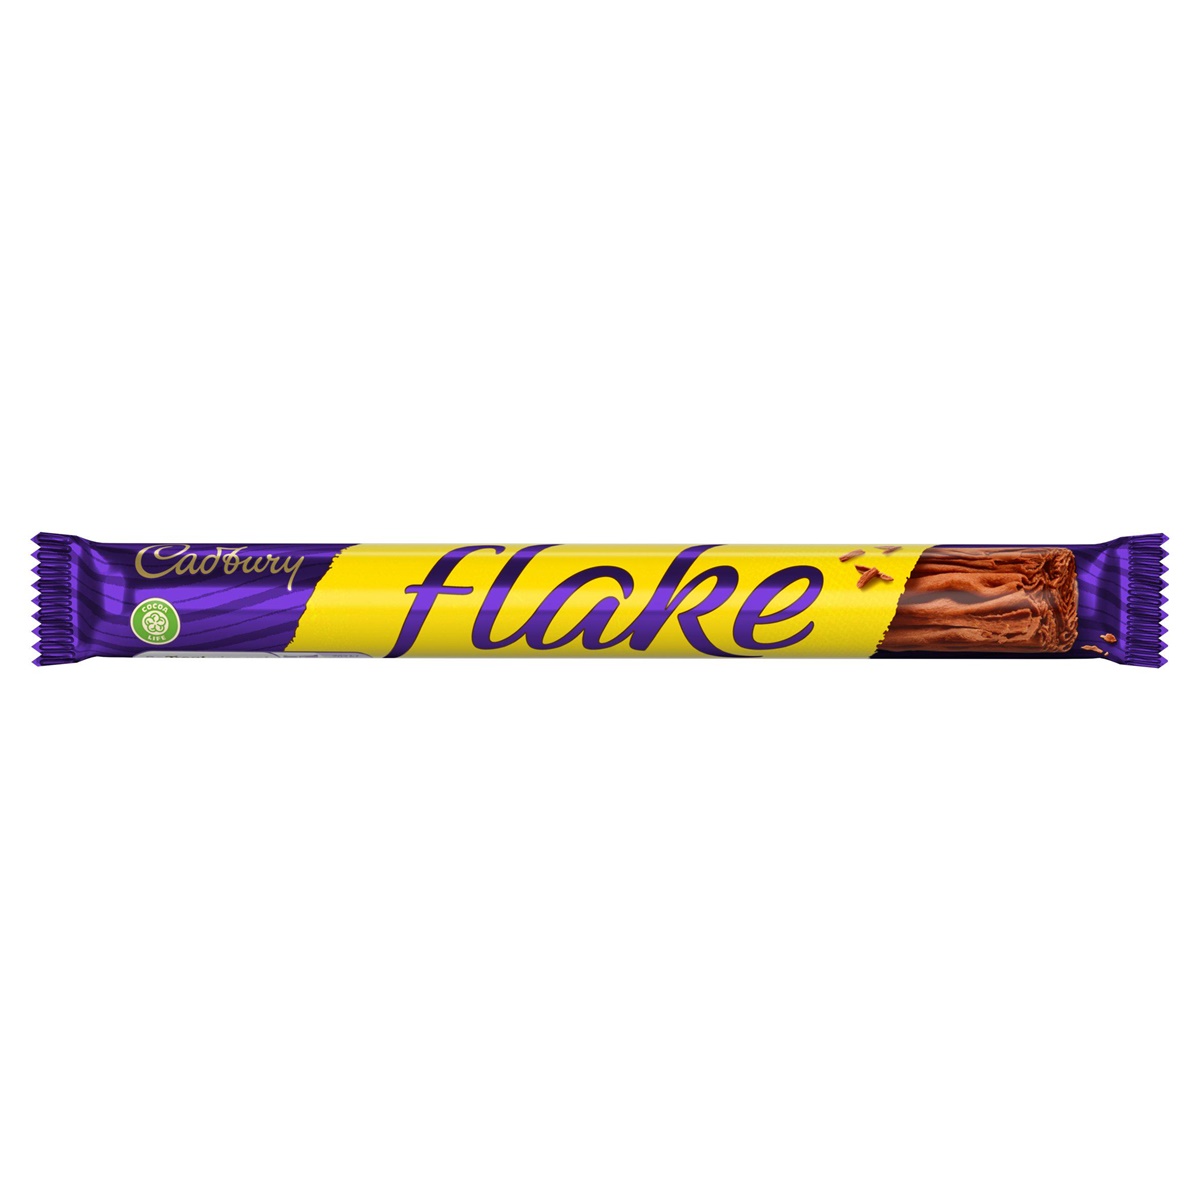 Cadbury Flake Candy - 32 g packet